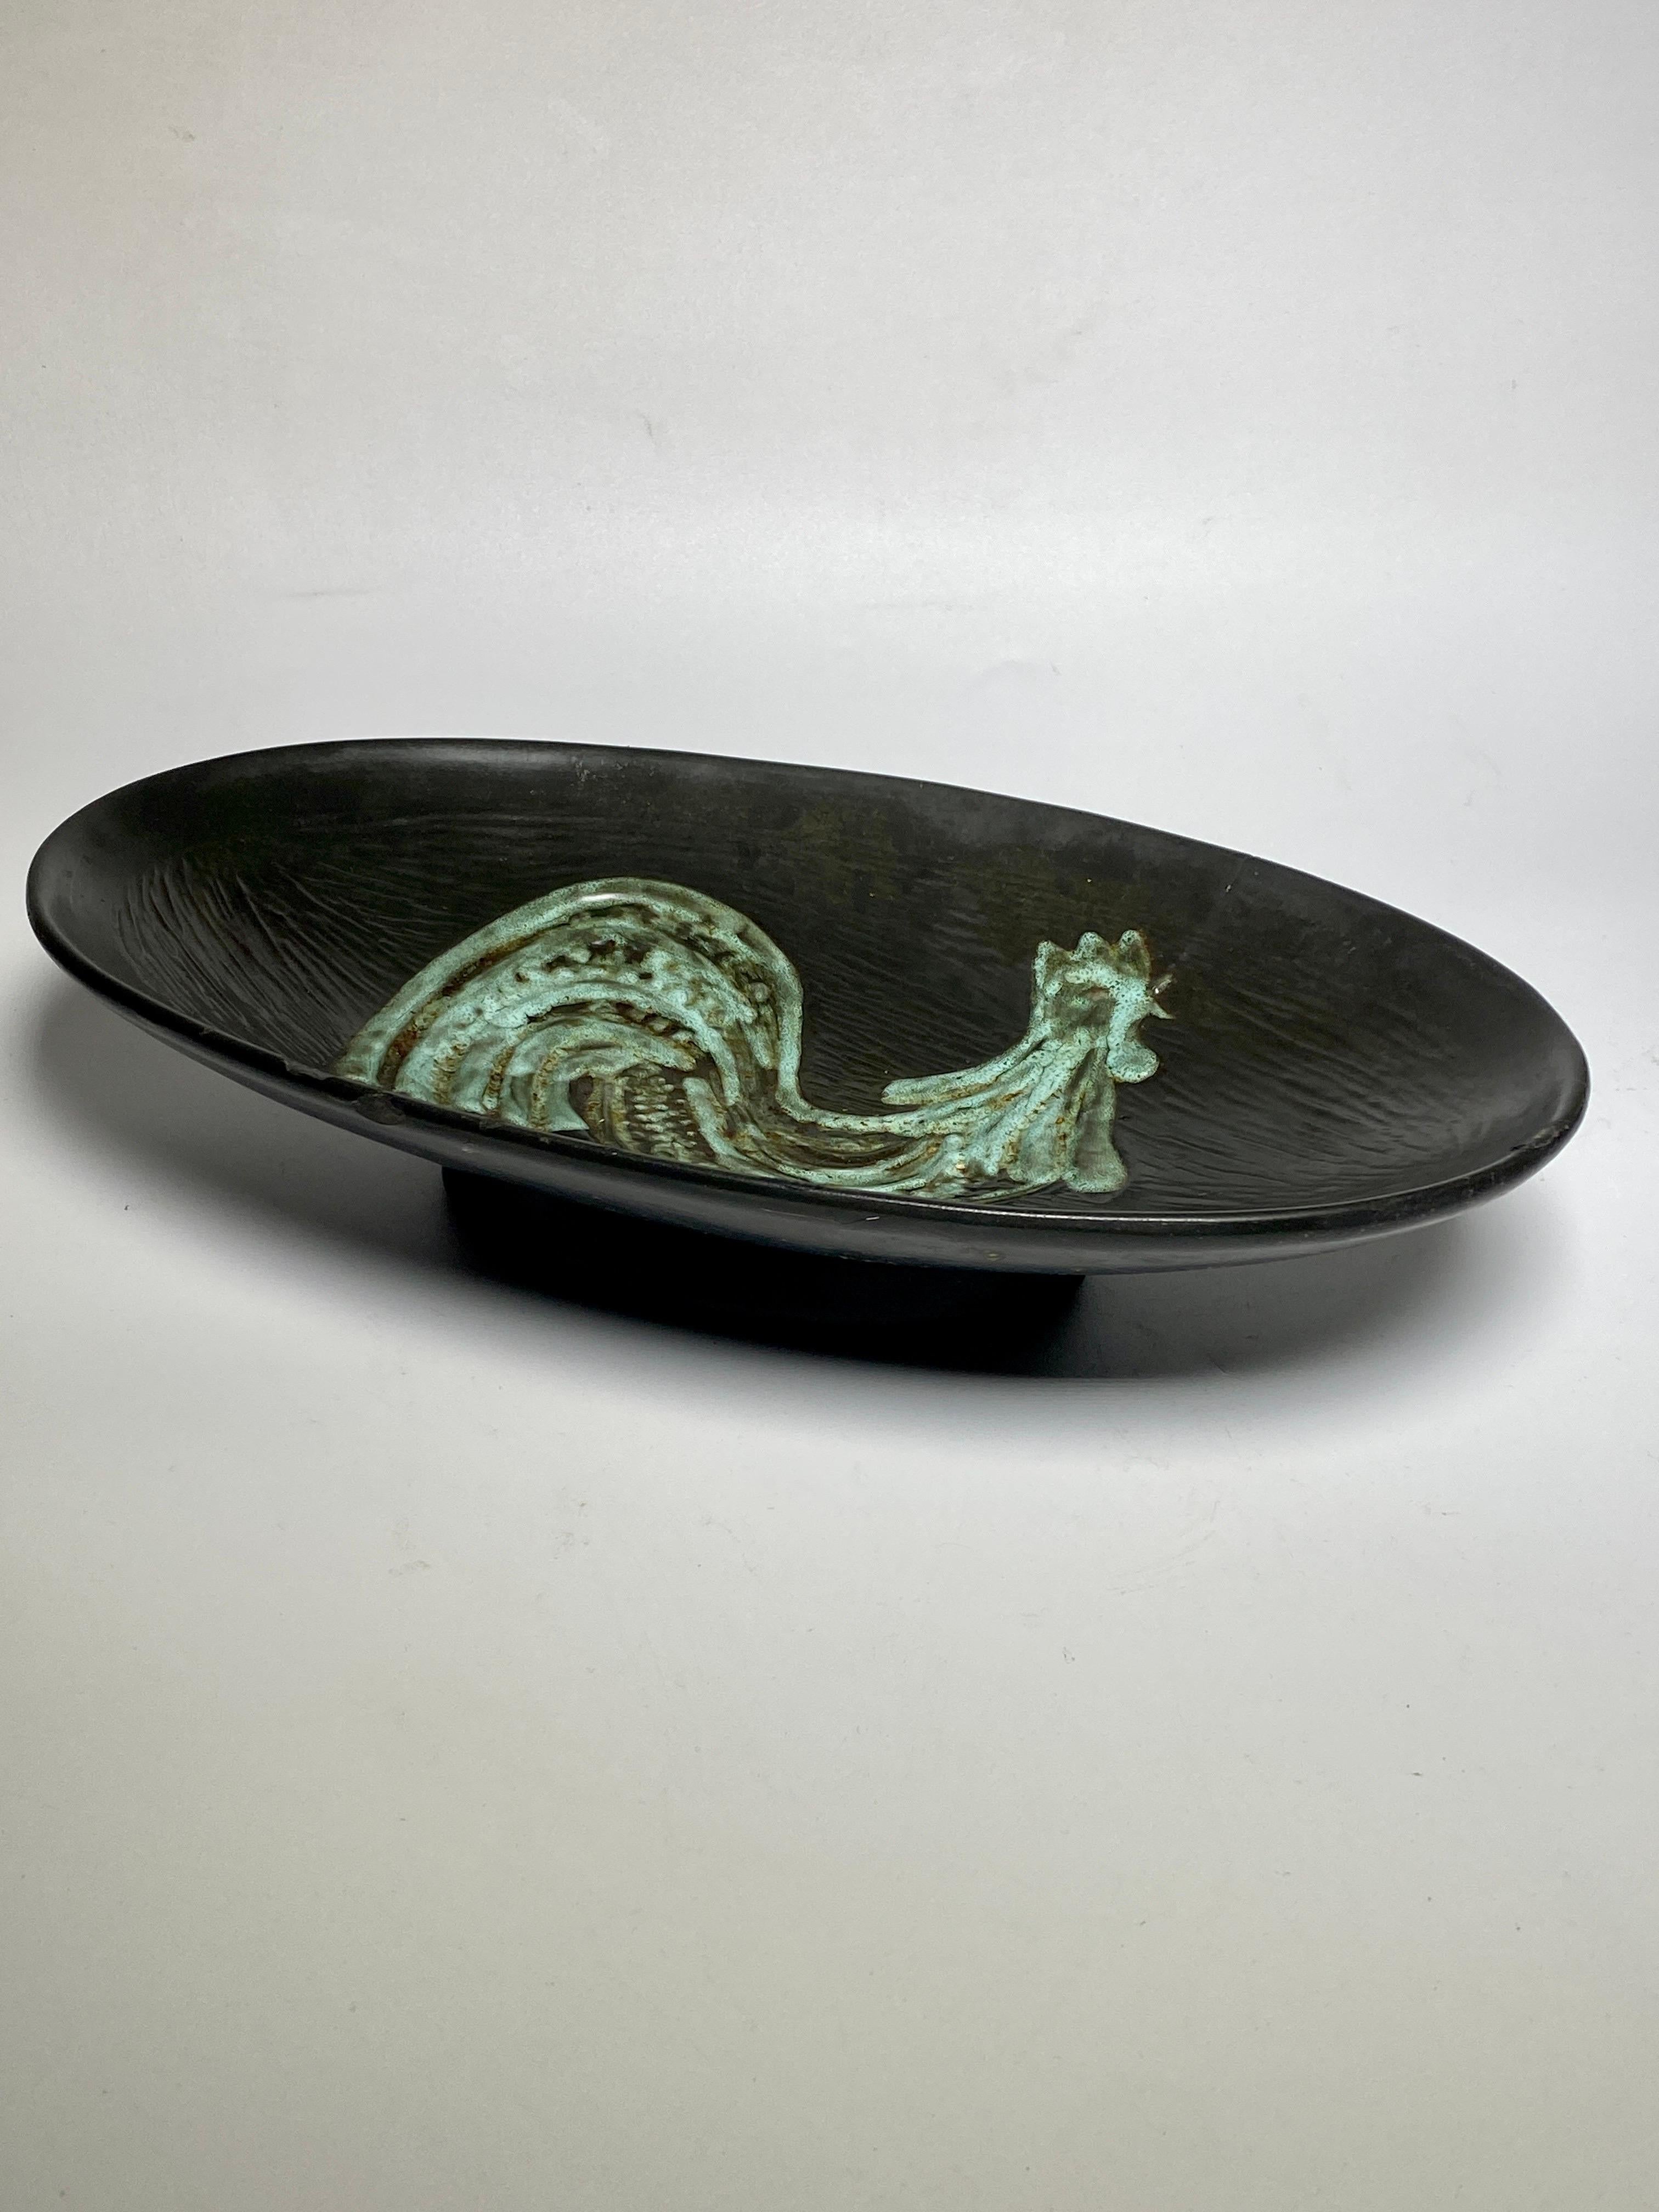 Ceramic Vide Poche, Decorative Dish, Representing a Rooster, Black and Green For Sale 5